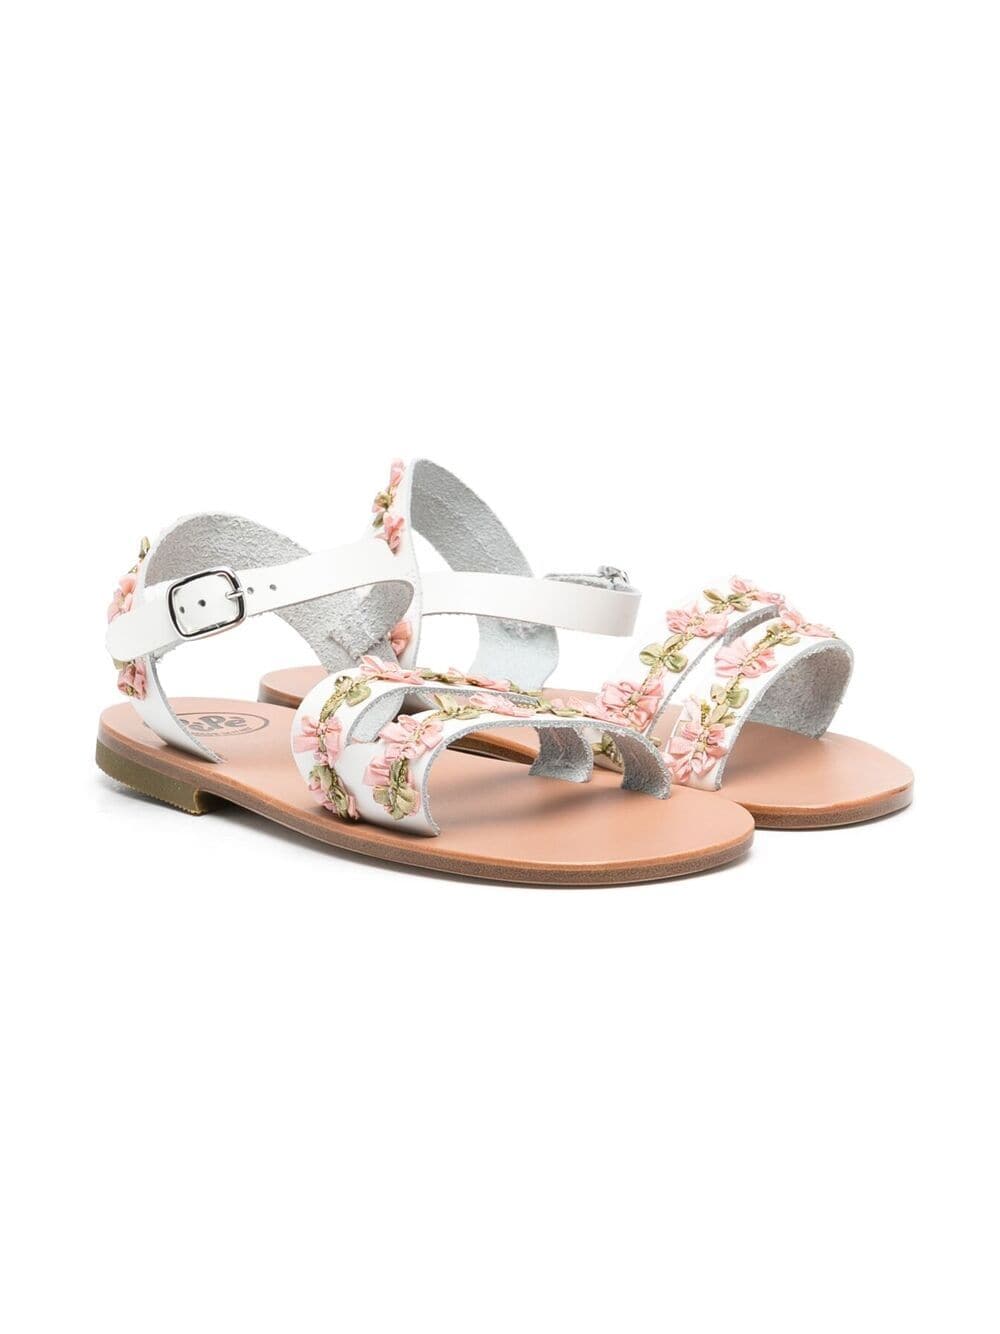 Pèpè floral embroidered sandals - White von Pèpè